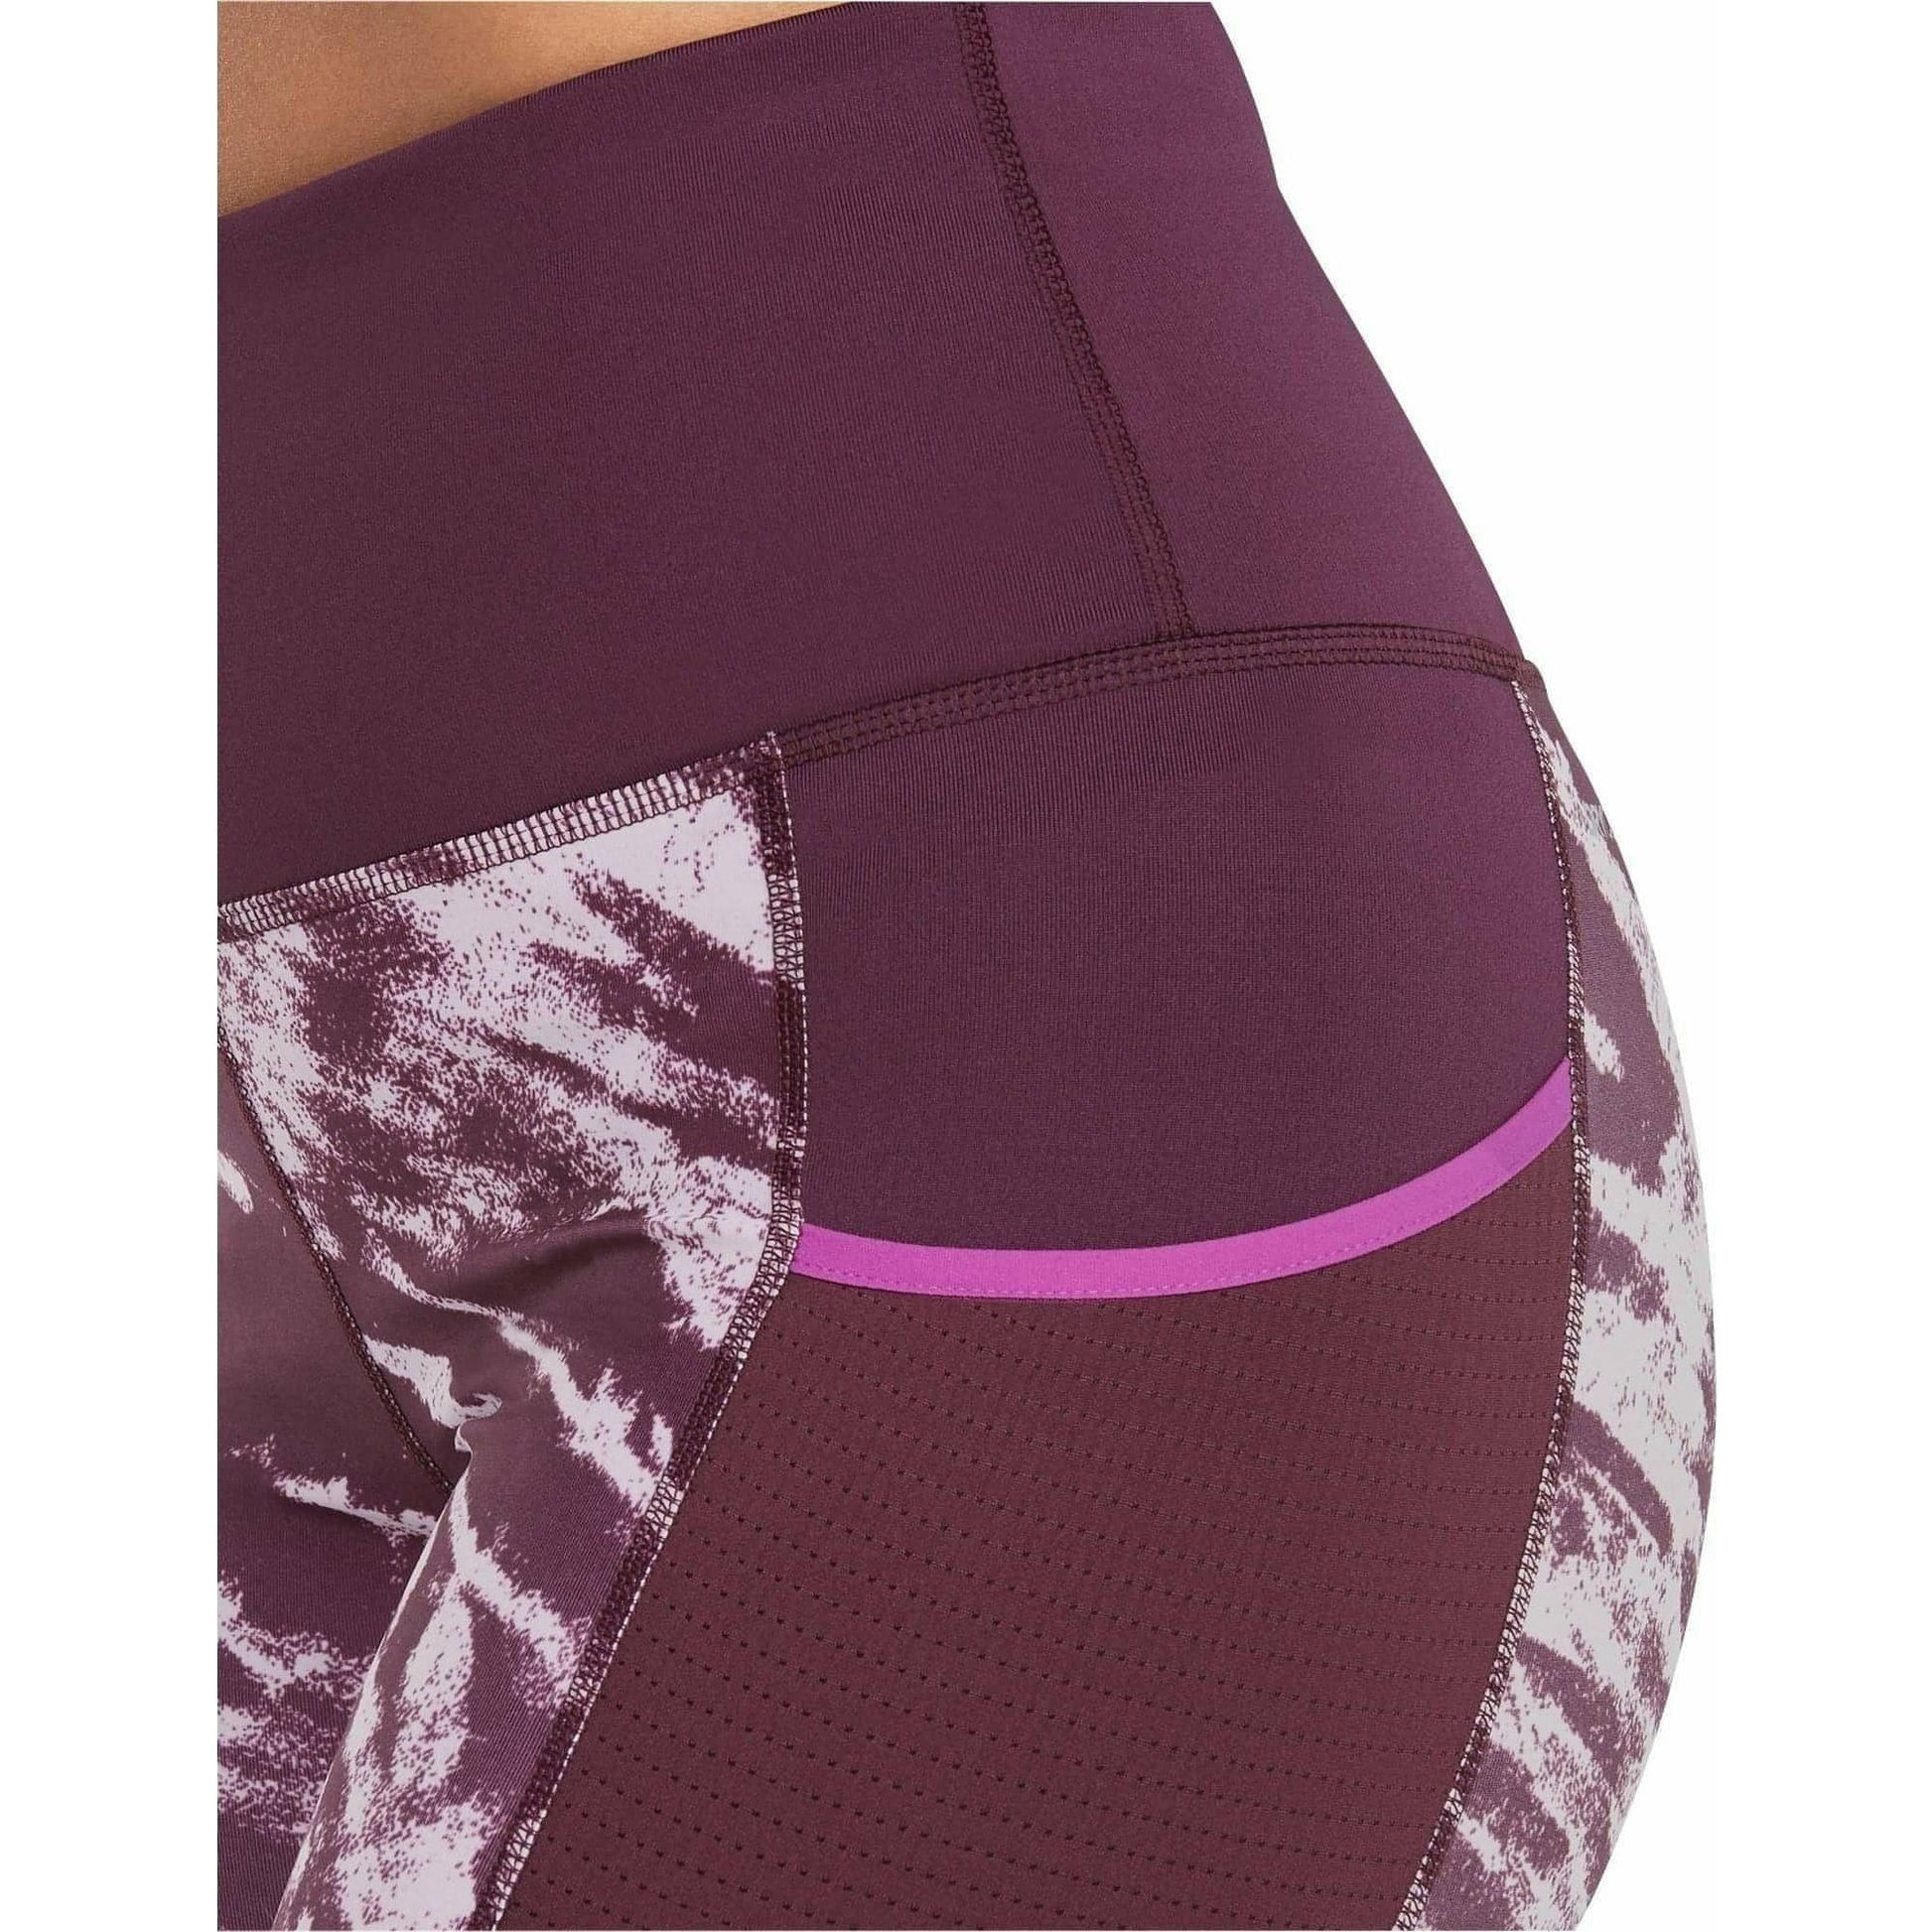 Puma 5K Graphic High Waist Womens 7/8 Running Tights - Purple - Start Fitness